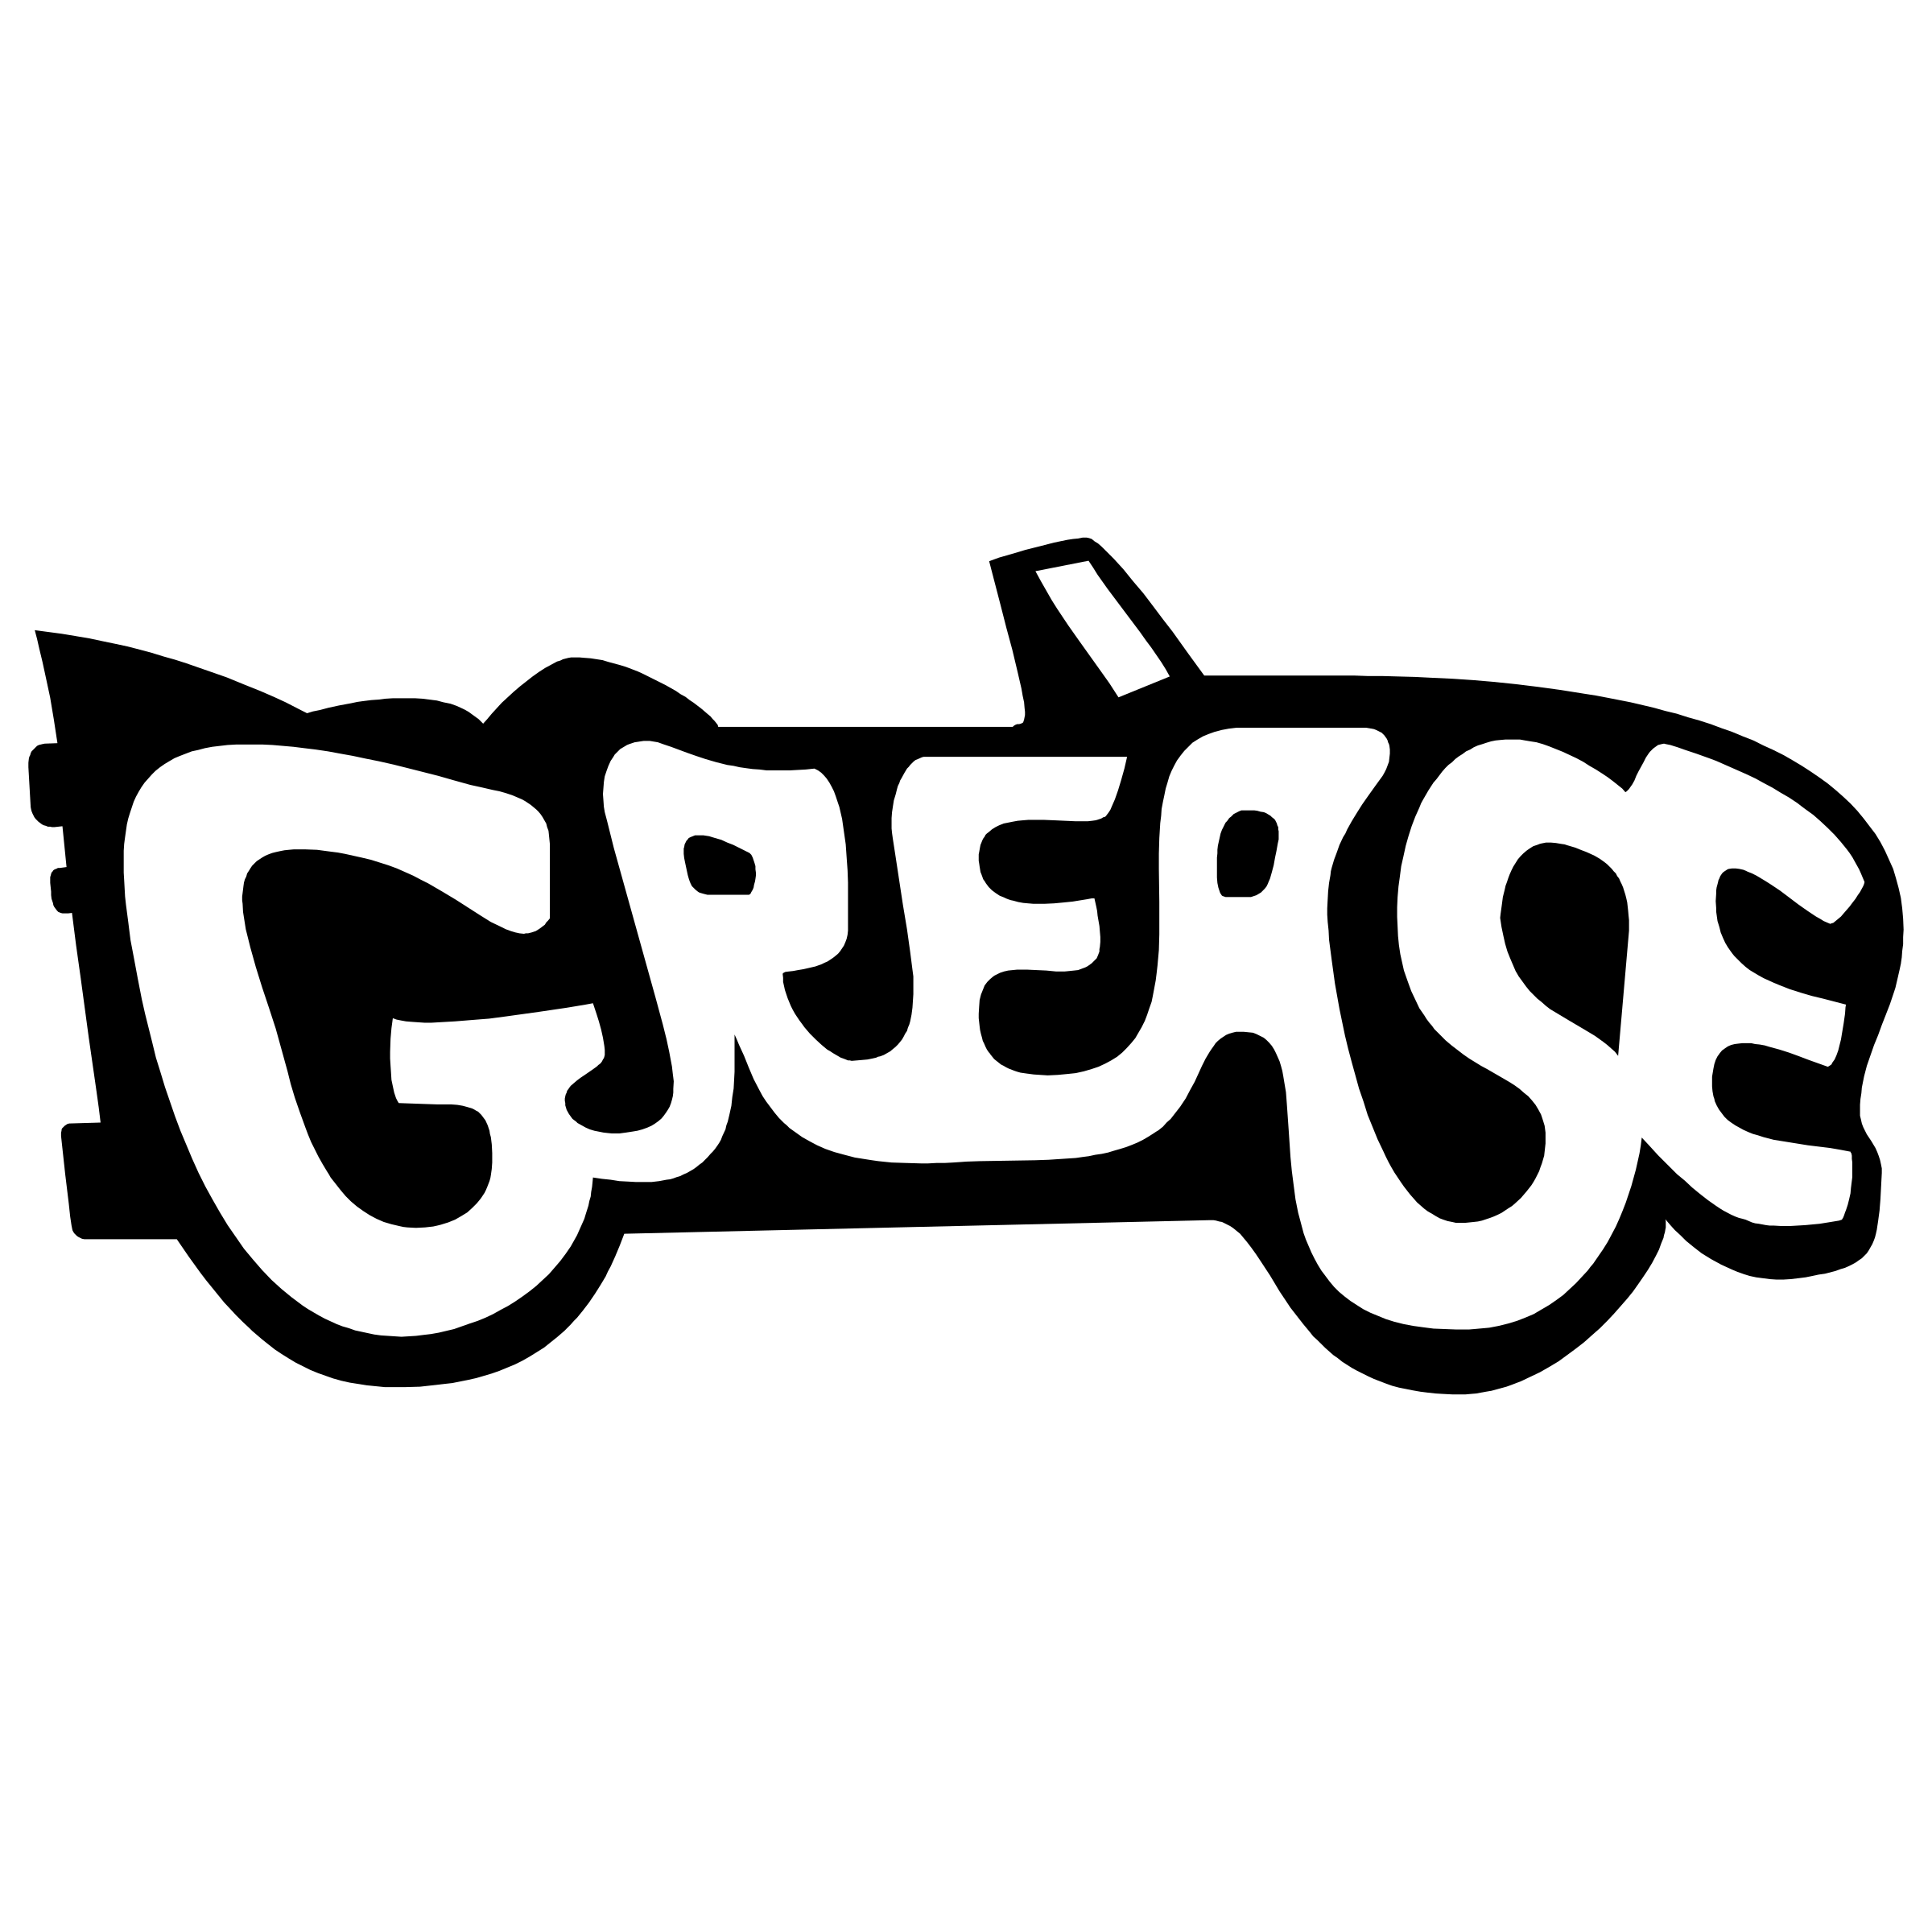 Grease Logo - Grease Logo PNG Transparent & SVG Vector - Freebie Supply